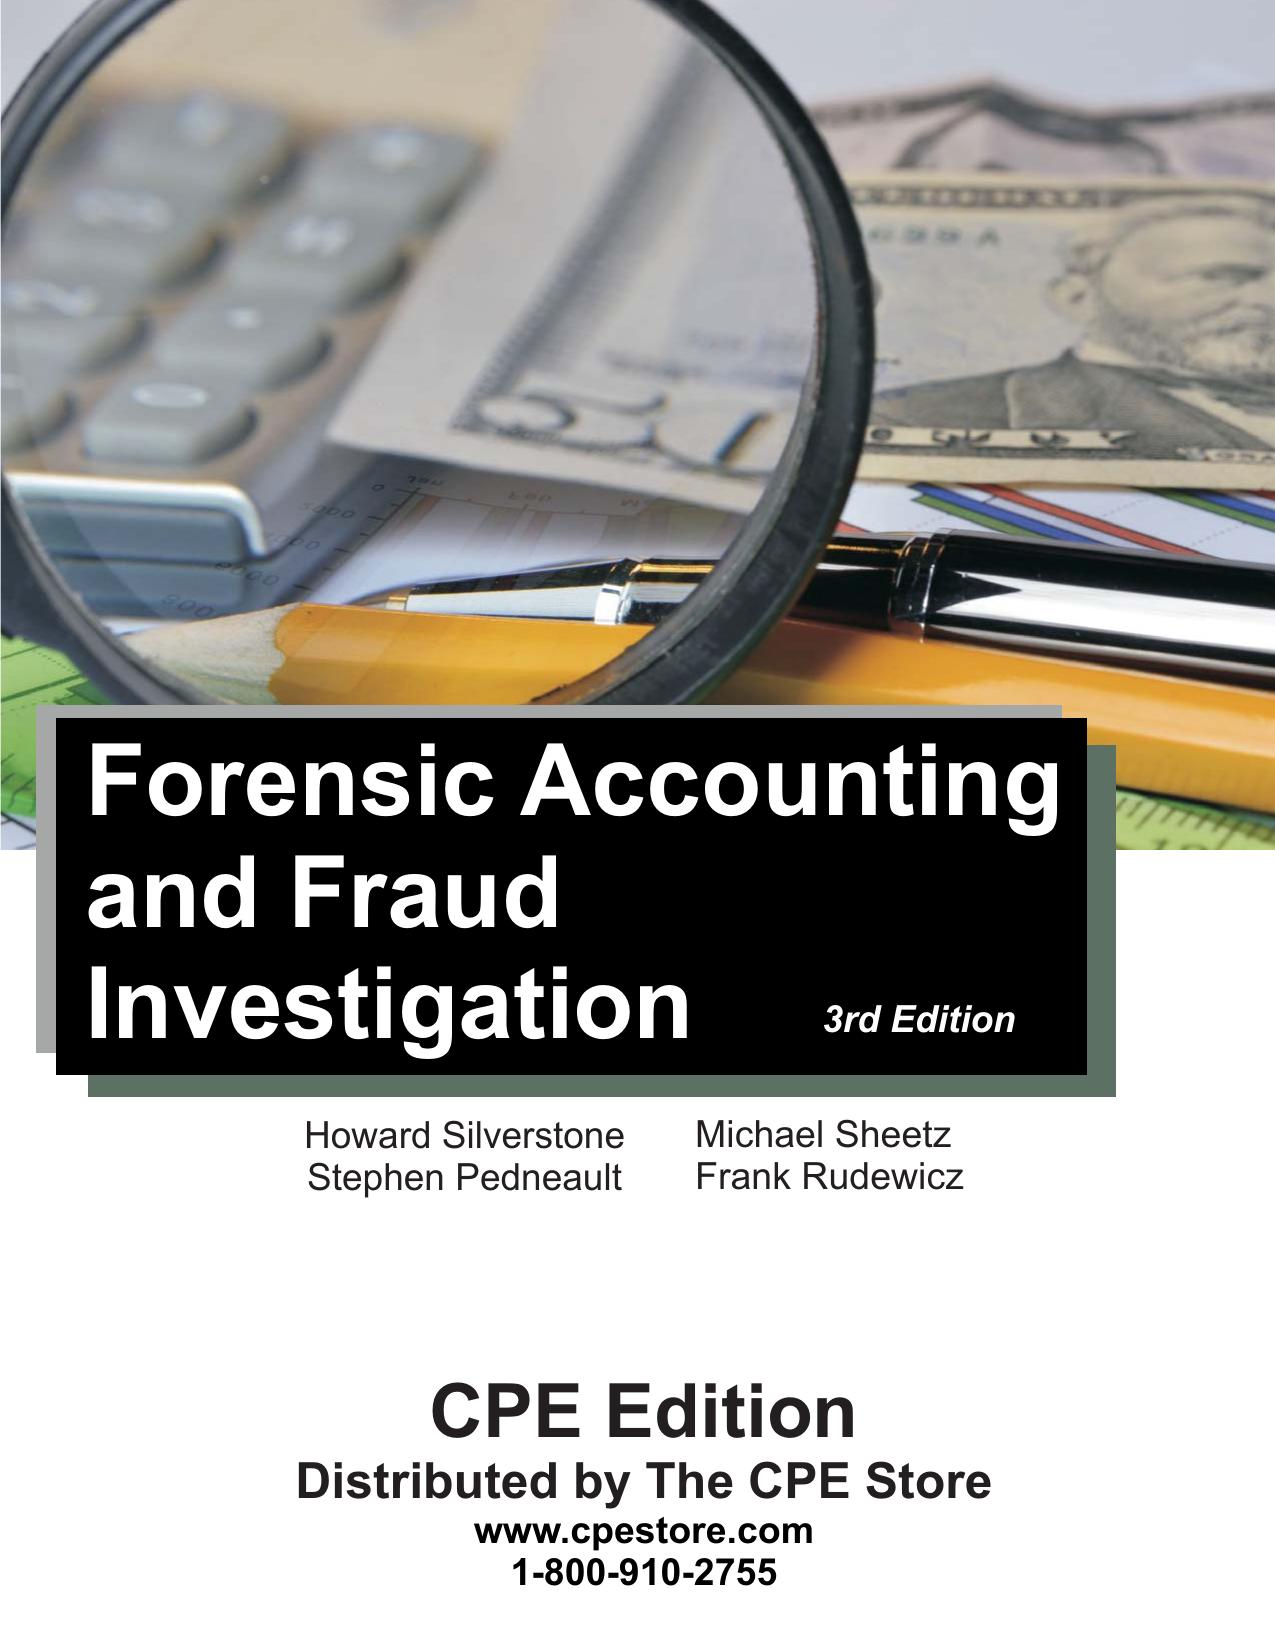 Microsoft Word - Forensic Accounting and Fraud.docx